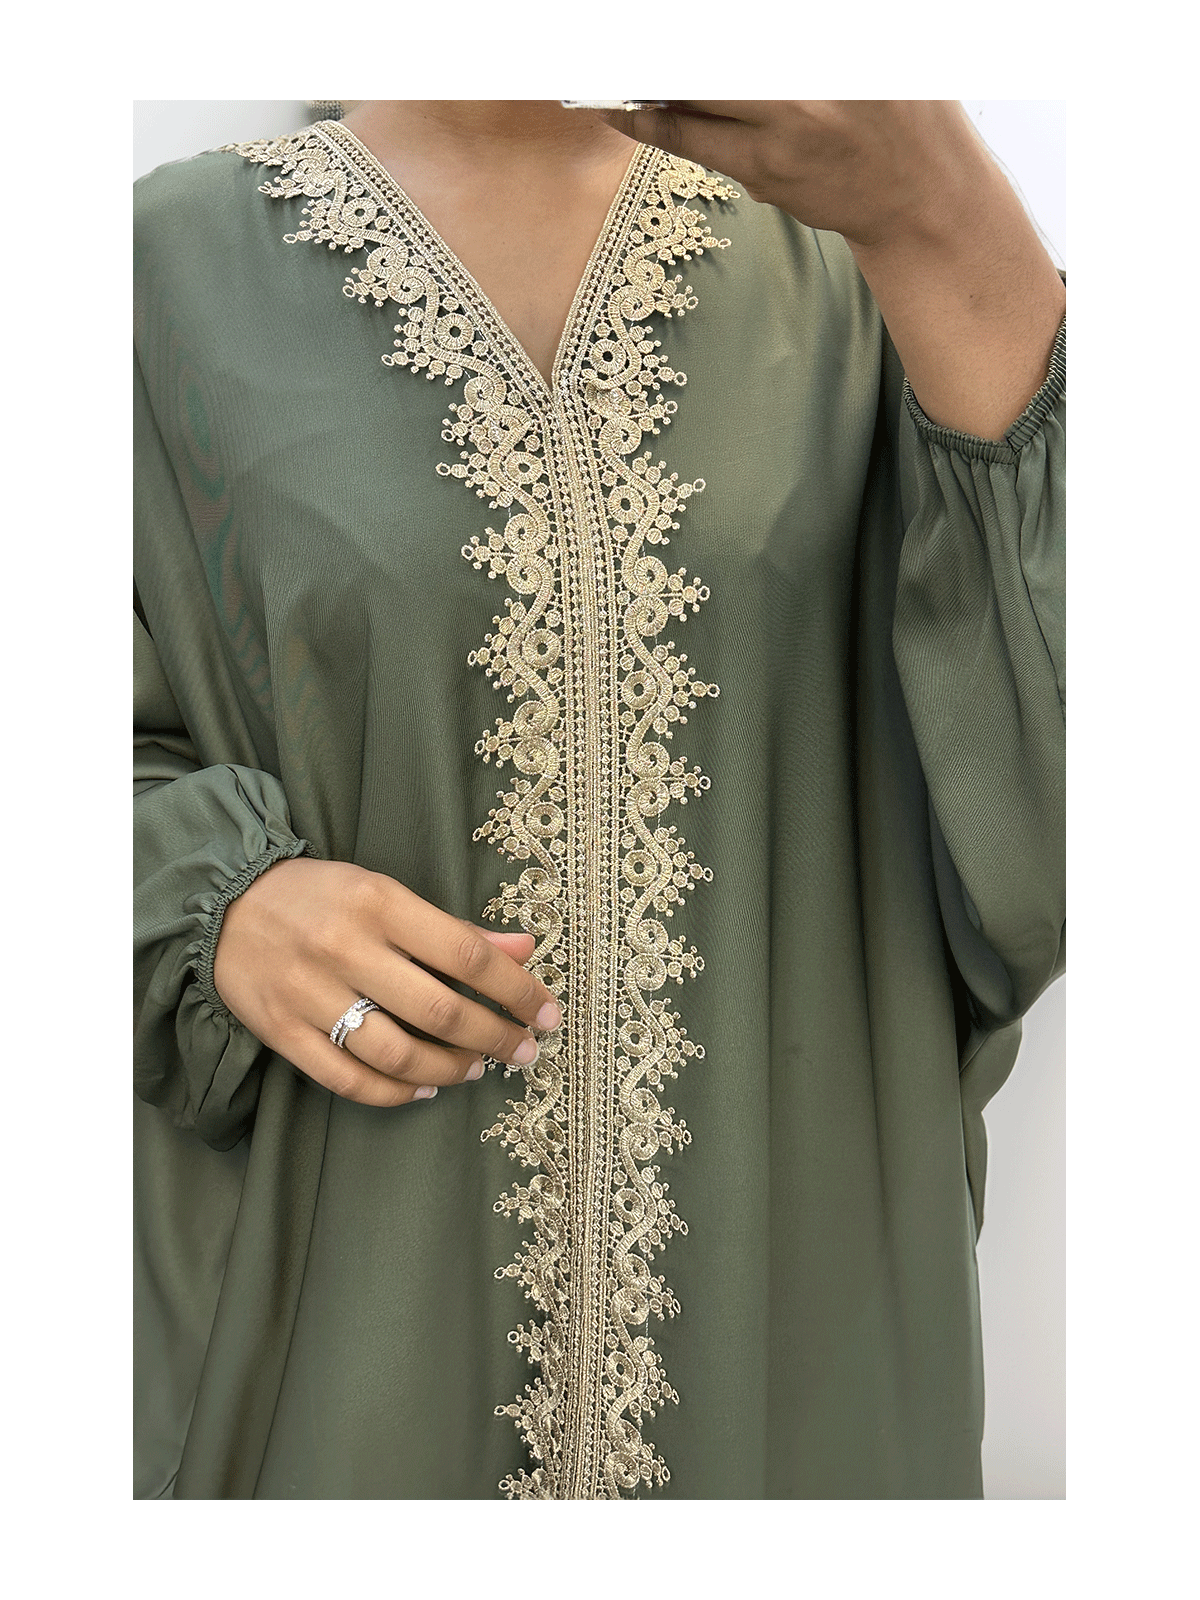 Longue abaya kaki over size avec une jolie dentelle  - 5